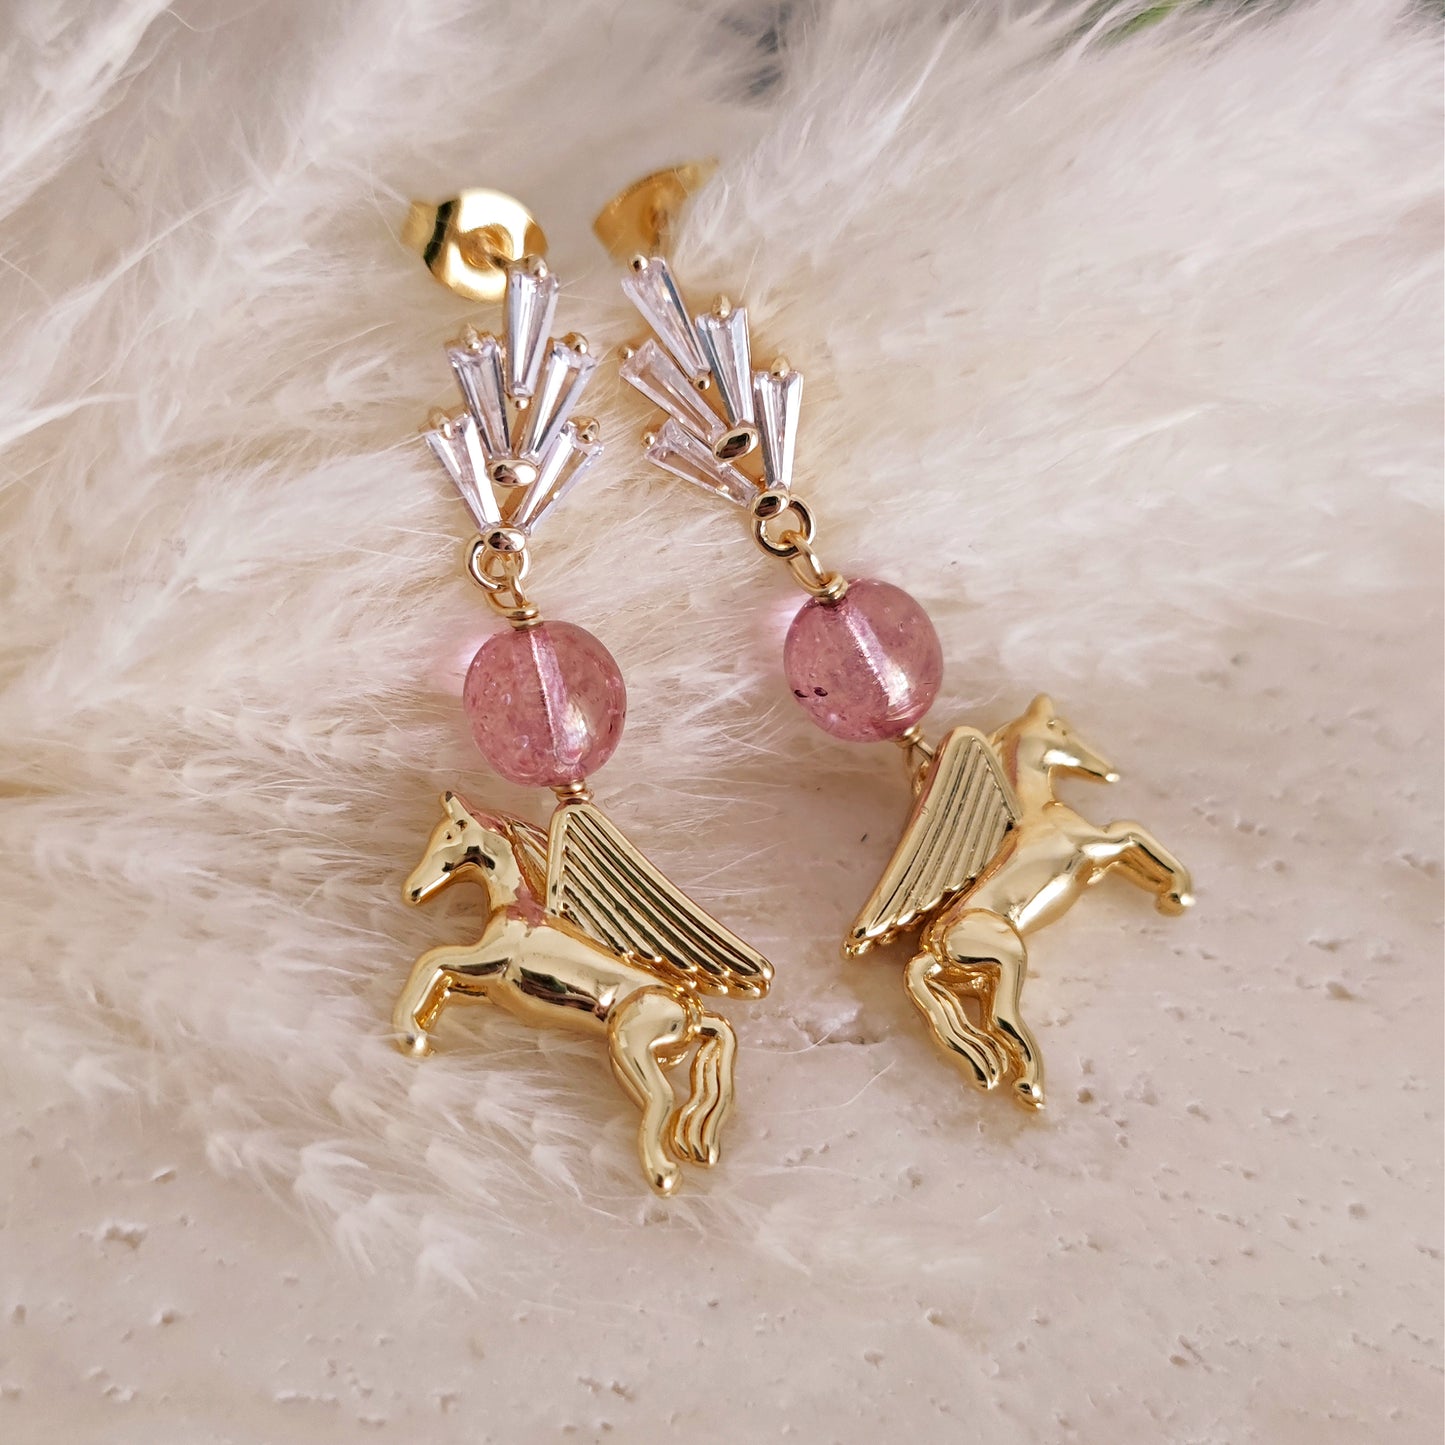 Cute "Pegasus" dangling earrings with crystals